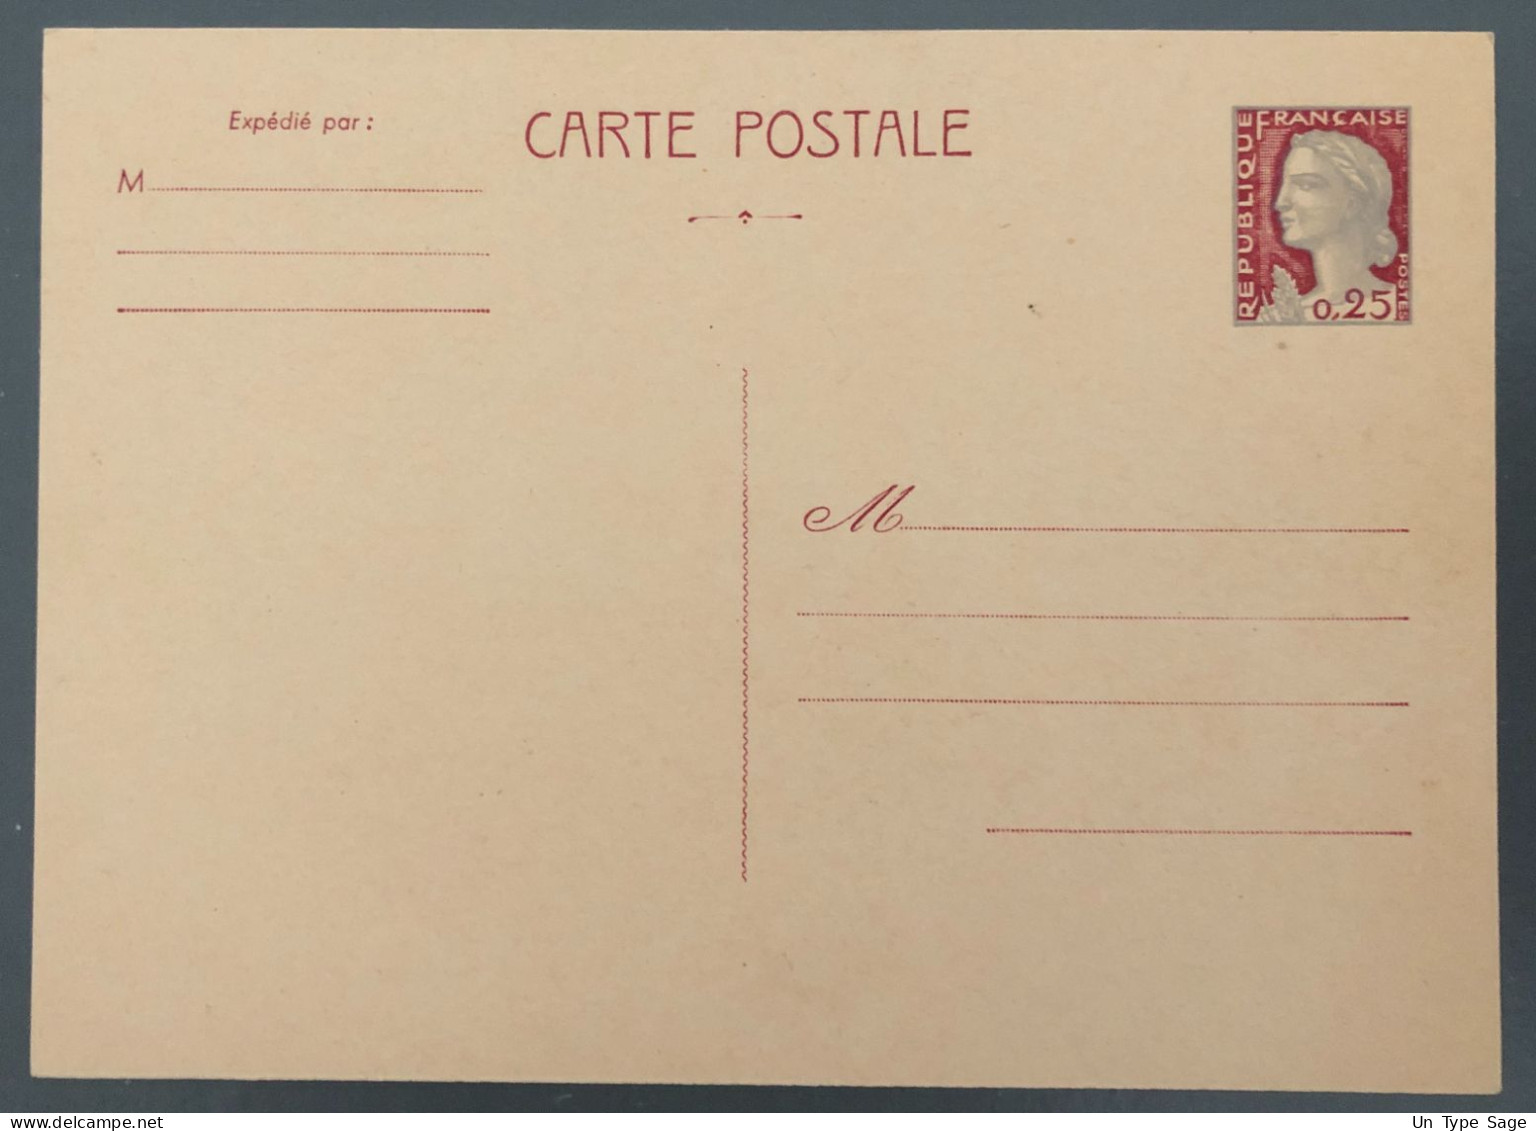 France Entier Type Marianne 25c. - Carte Postale - (B1973) - Streifbänder